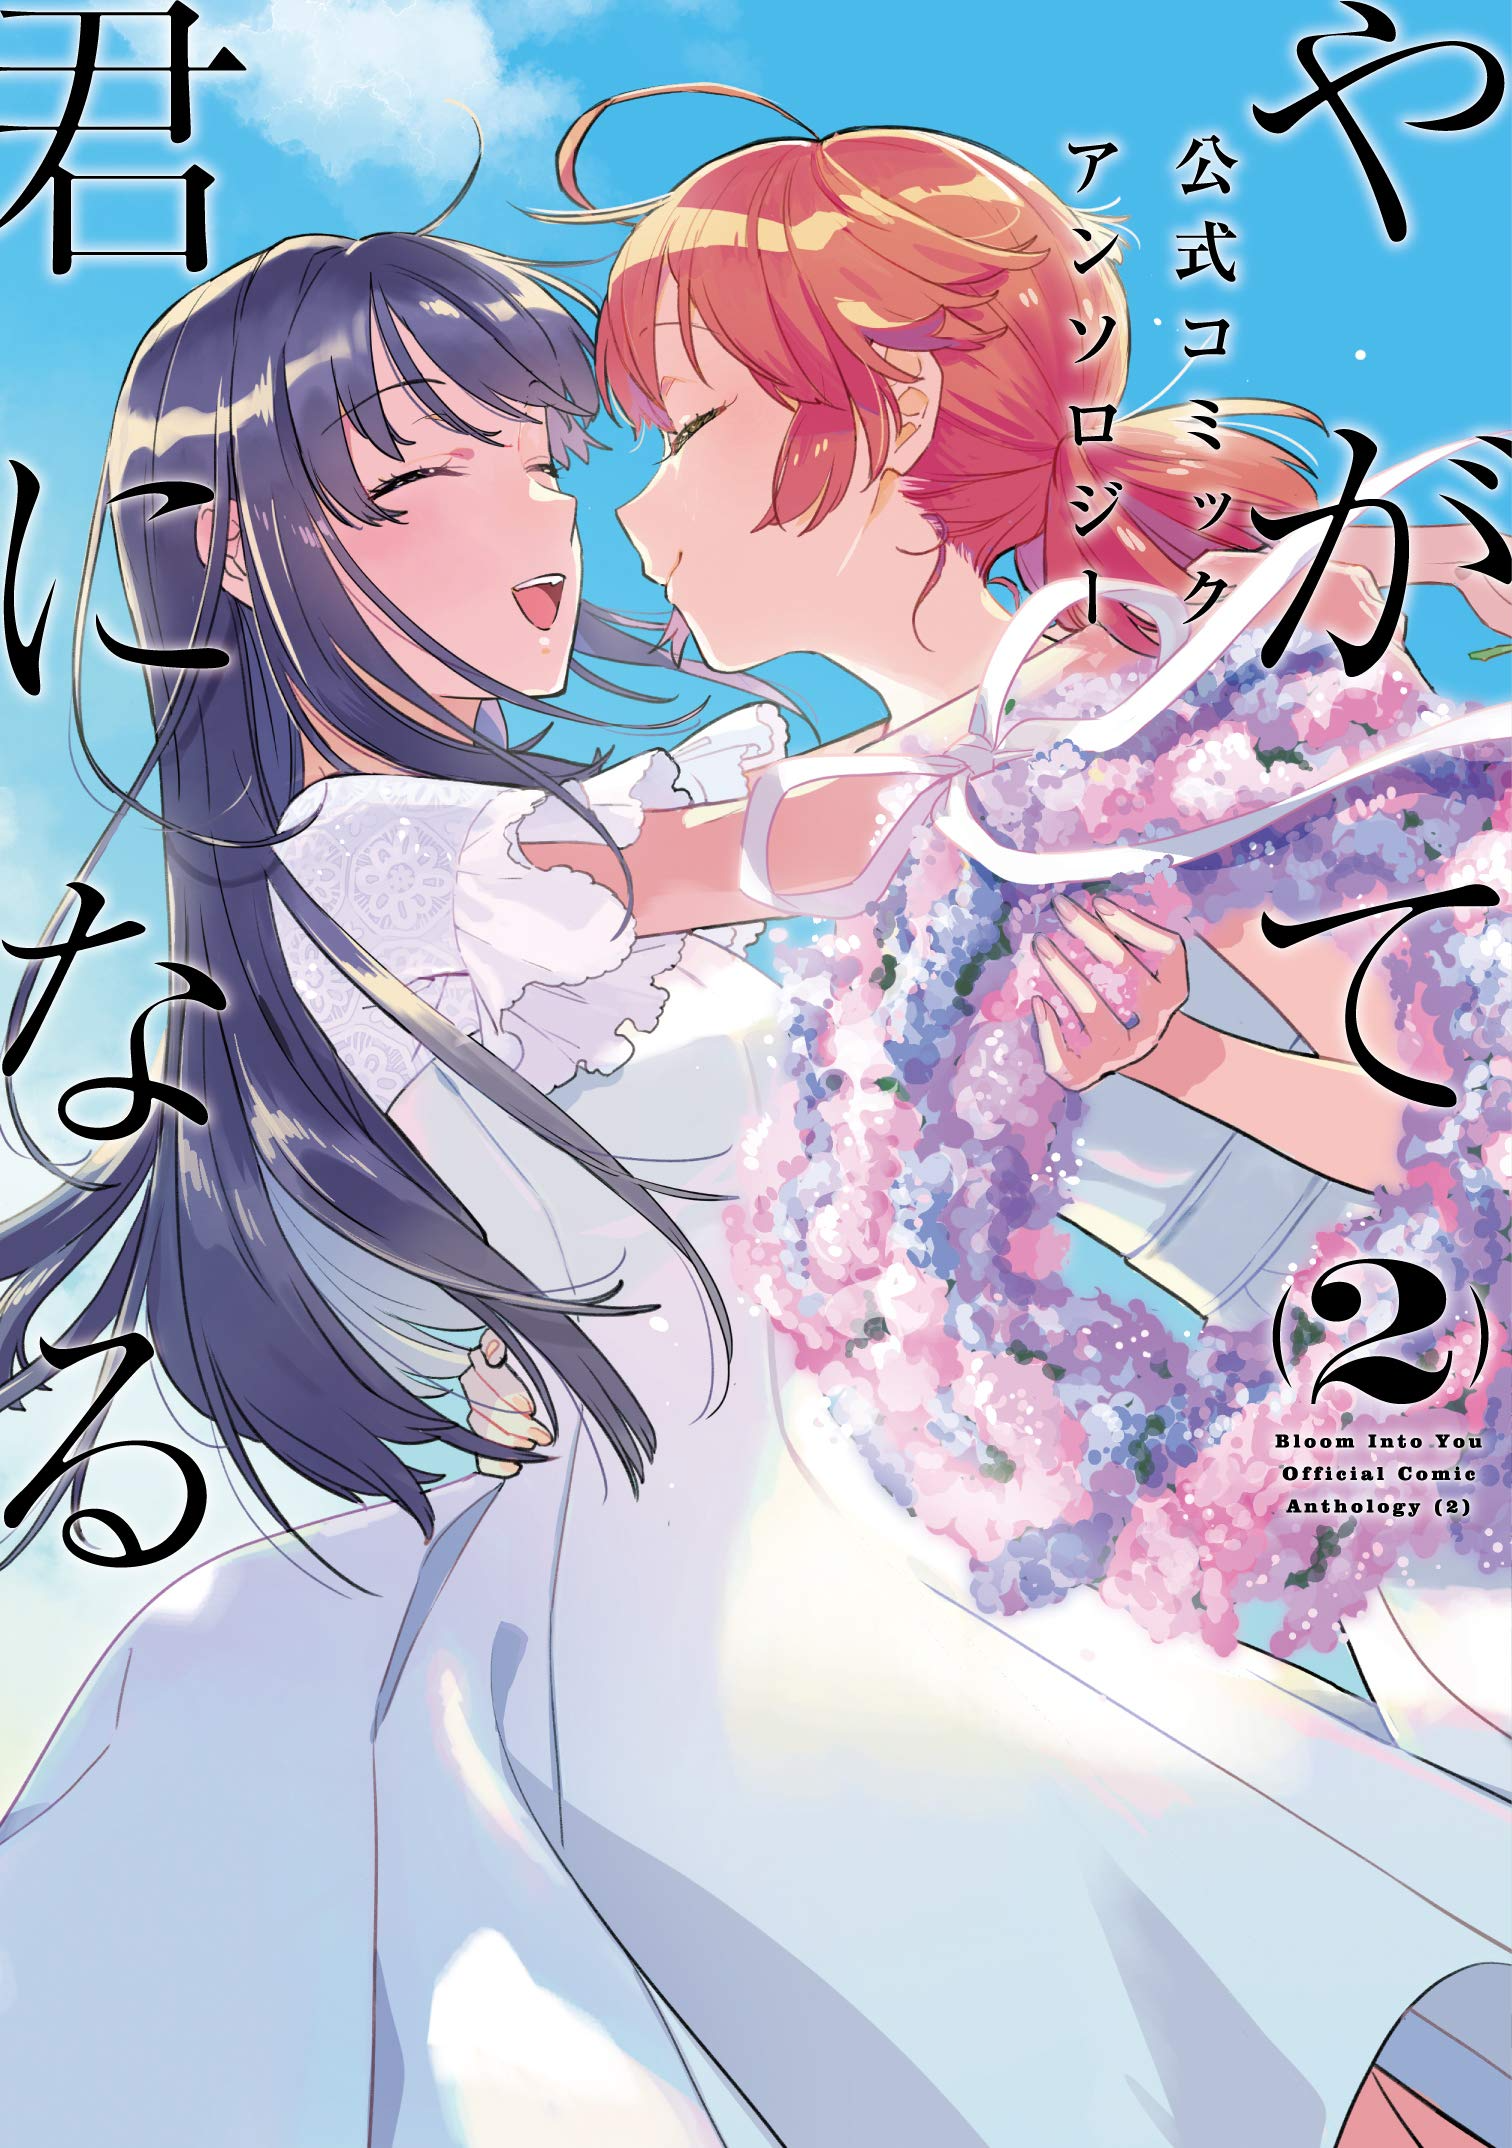 Light Novel Volume 2, Yagate Kimi ni Naru Wiki